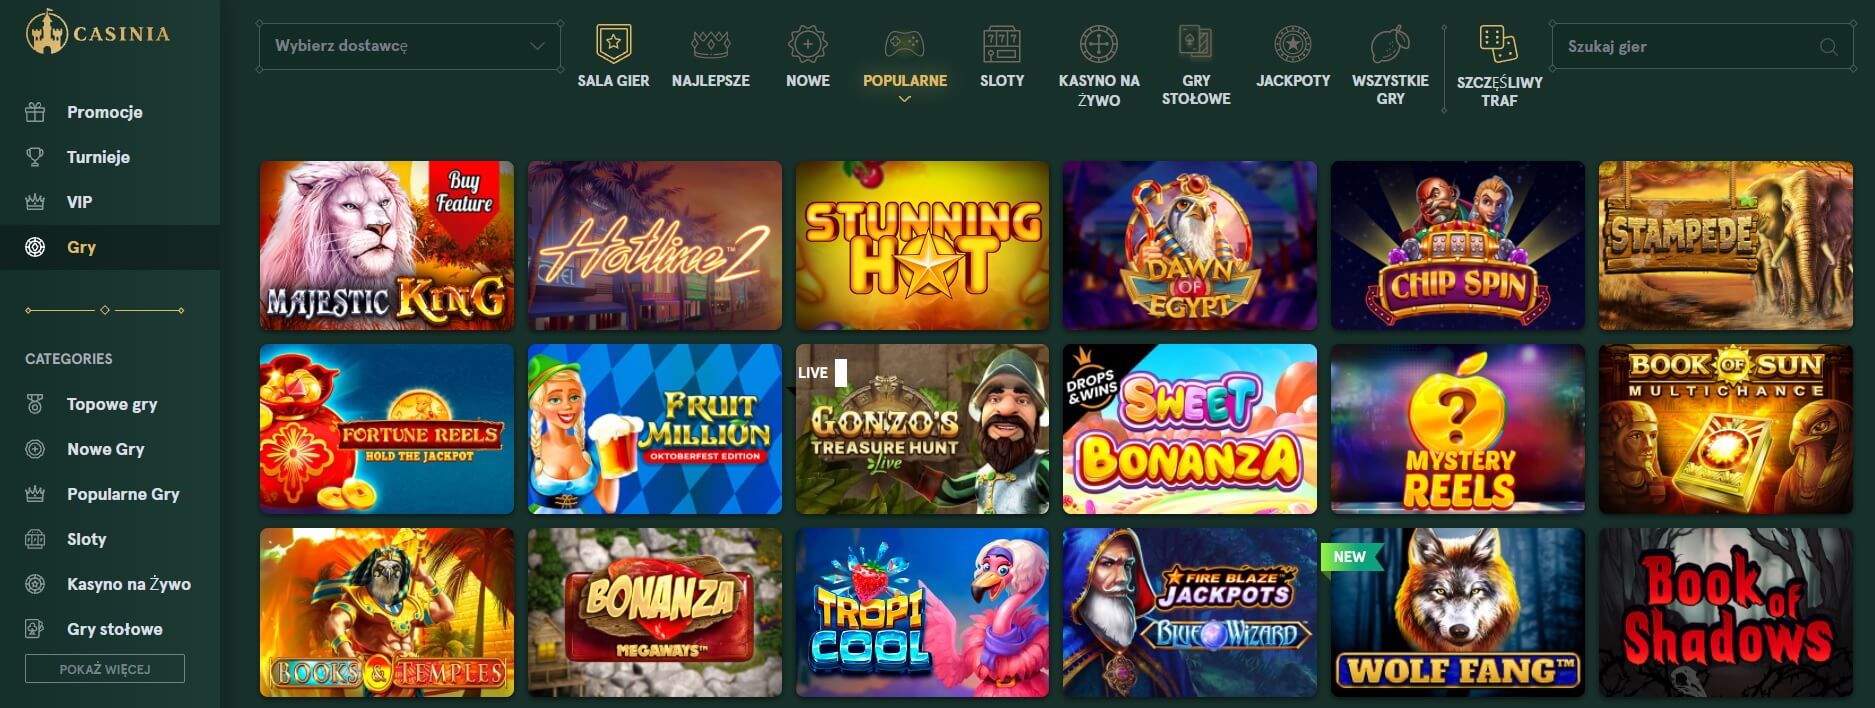 casinia gry kasynowe screenshot